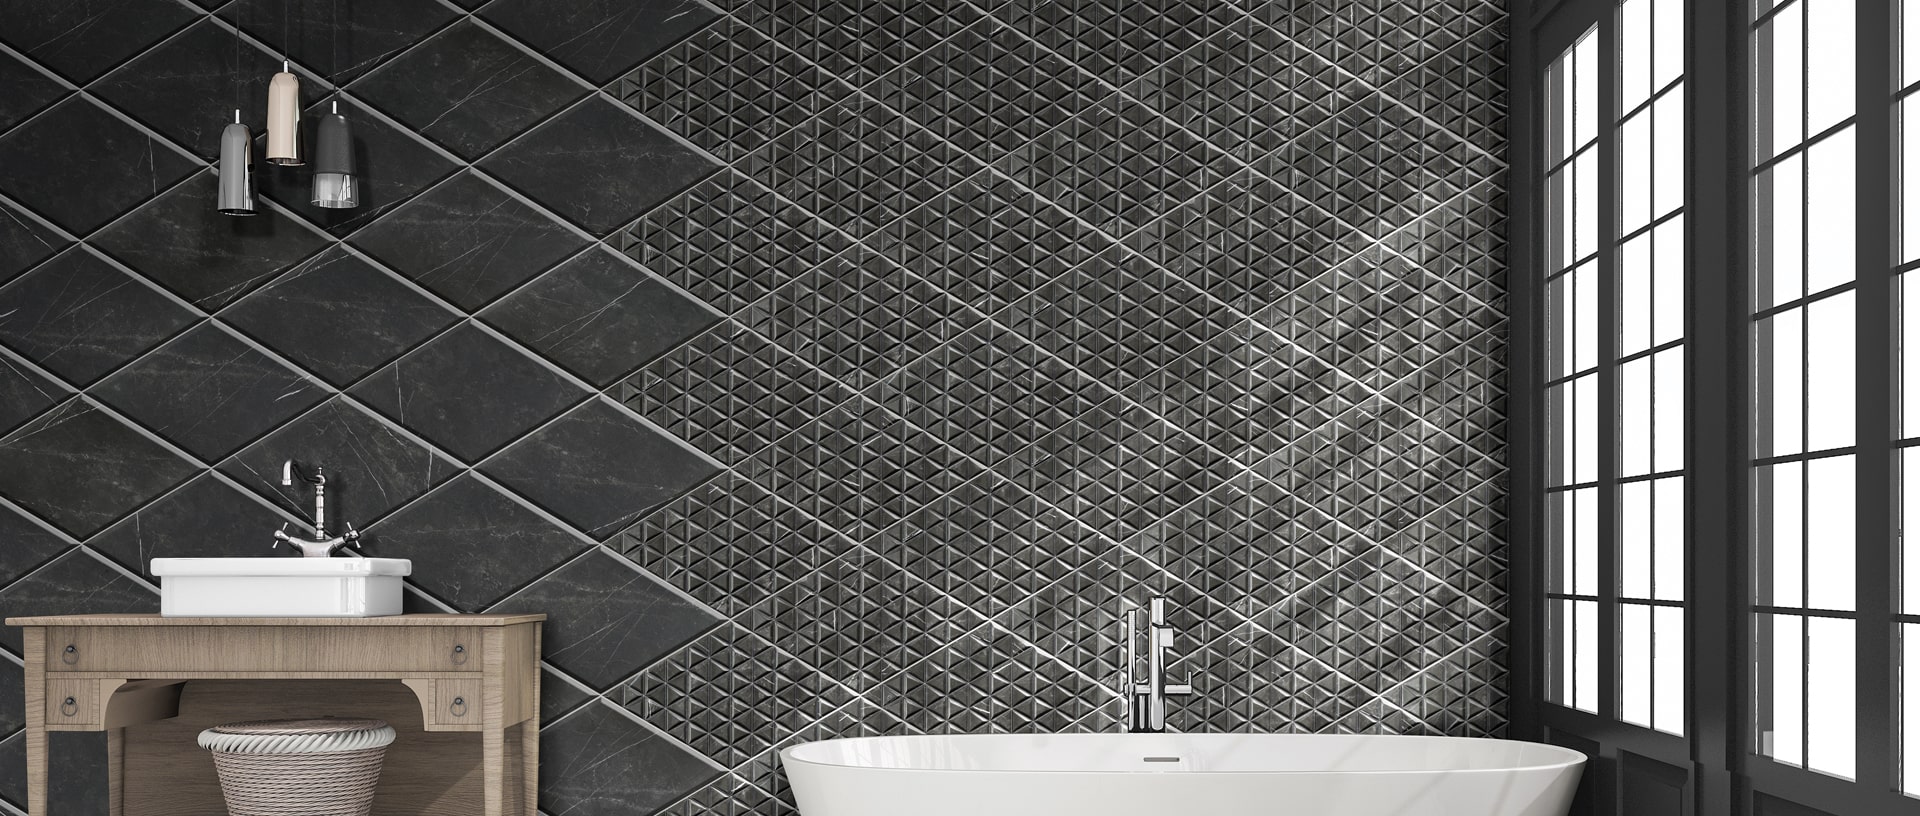 Floor Wall Tiles Brisbane Inspiring, Mosaic Bathroom Floor Tiles Australia